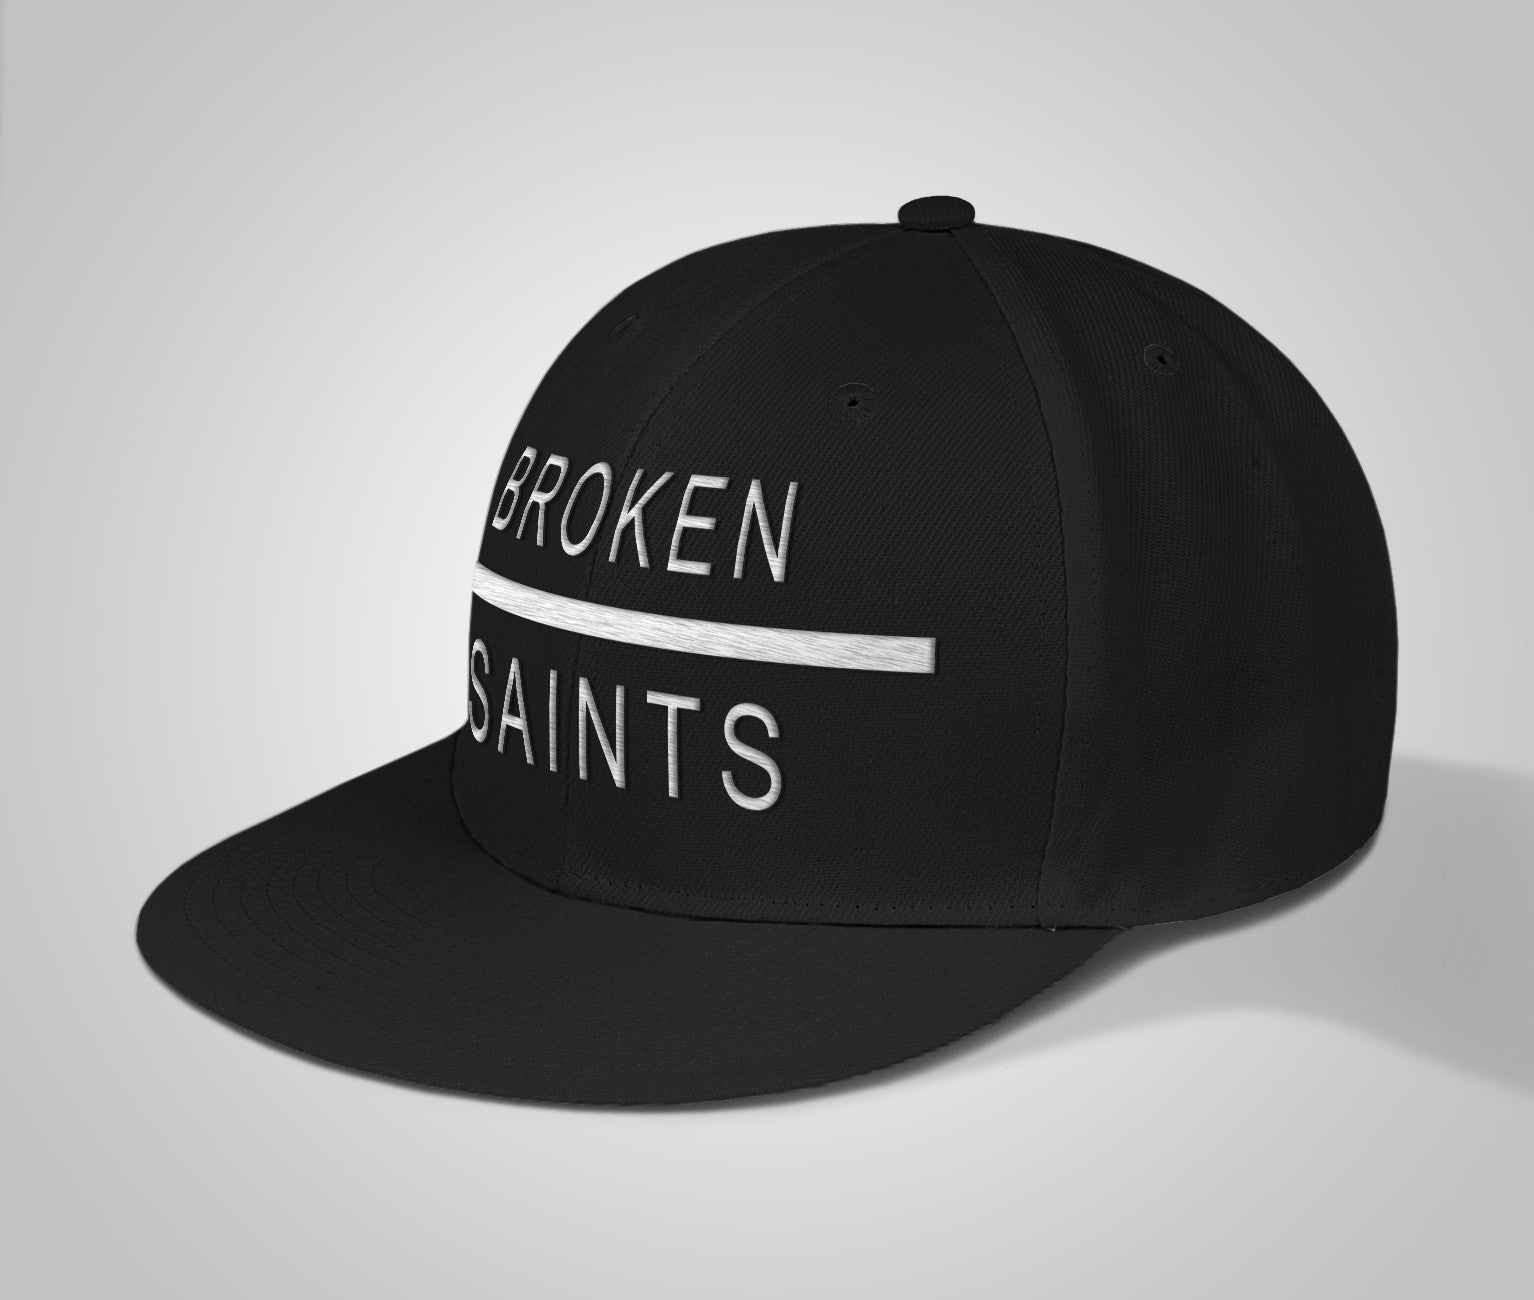 Broken Saints Snapbacks/Fitted